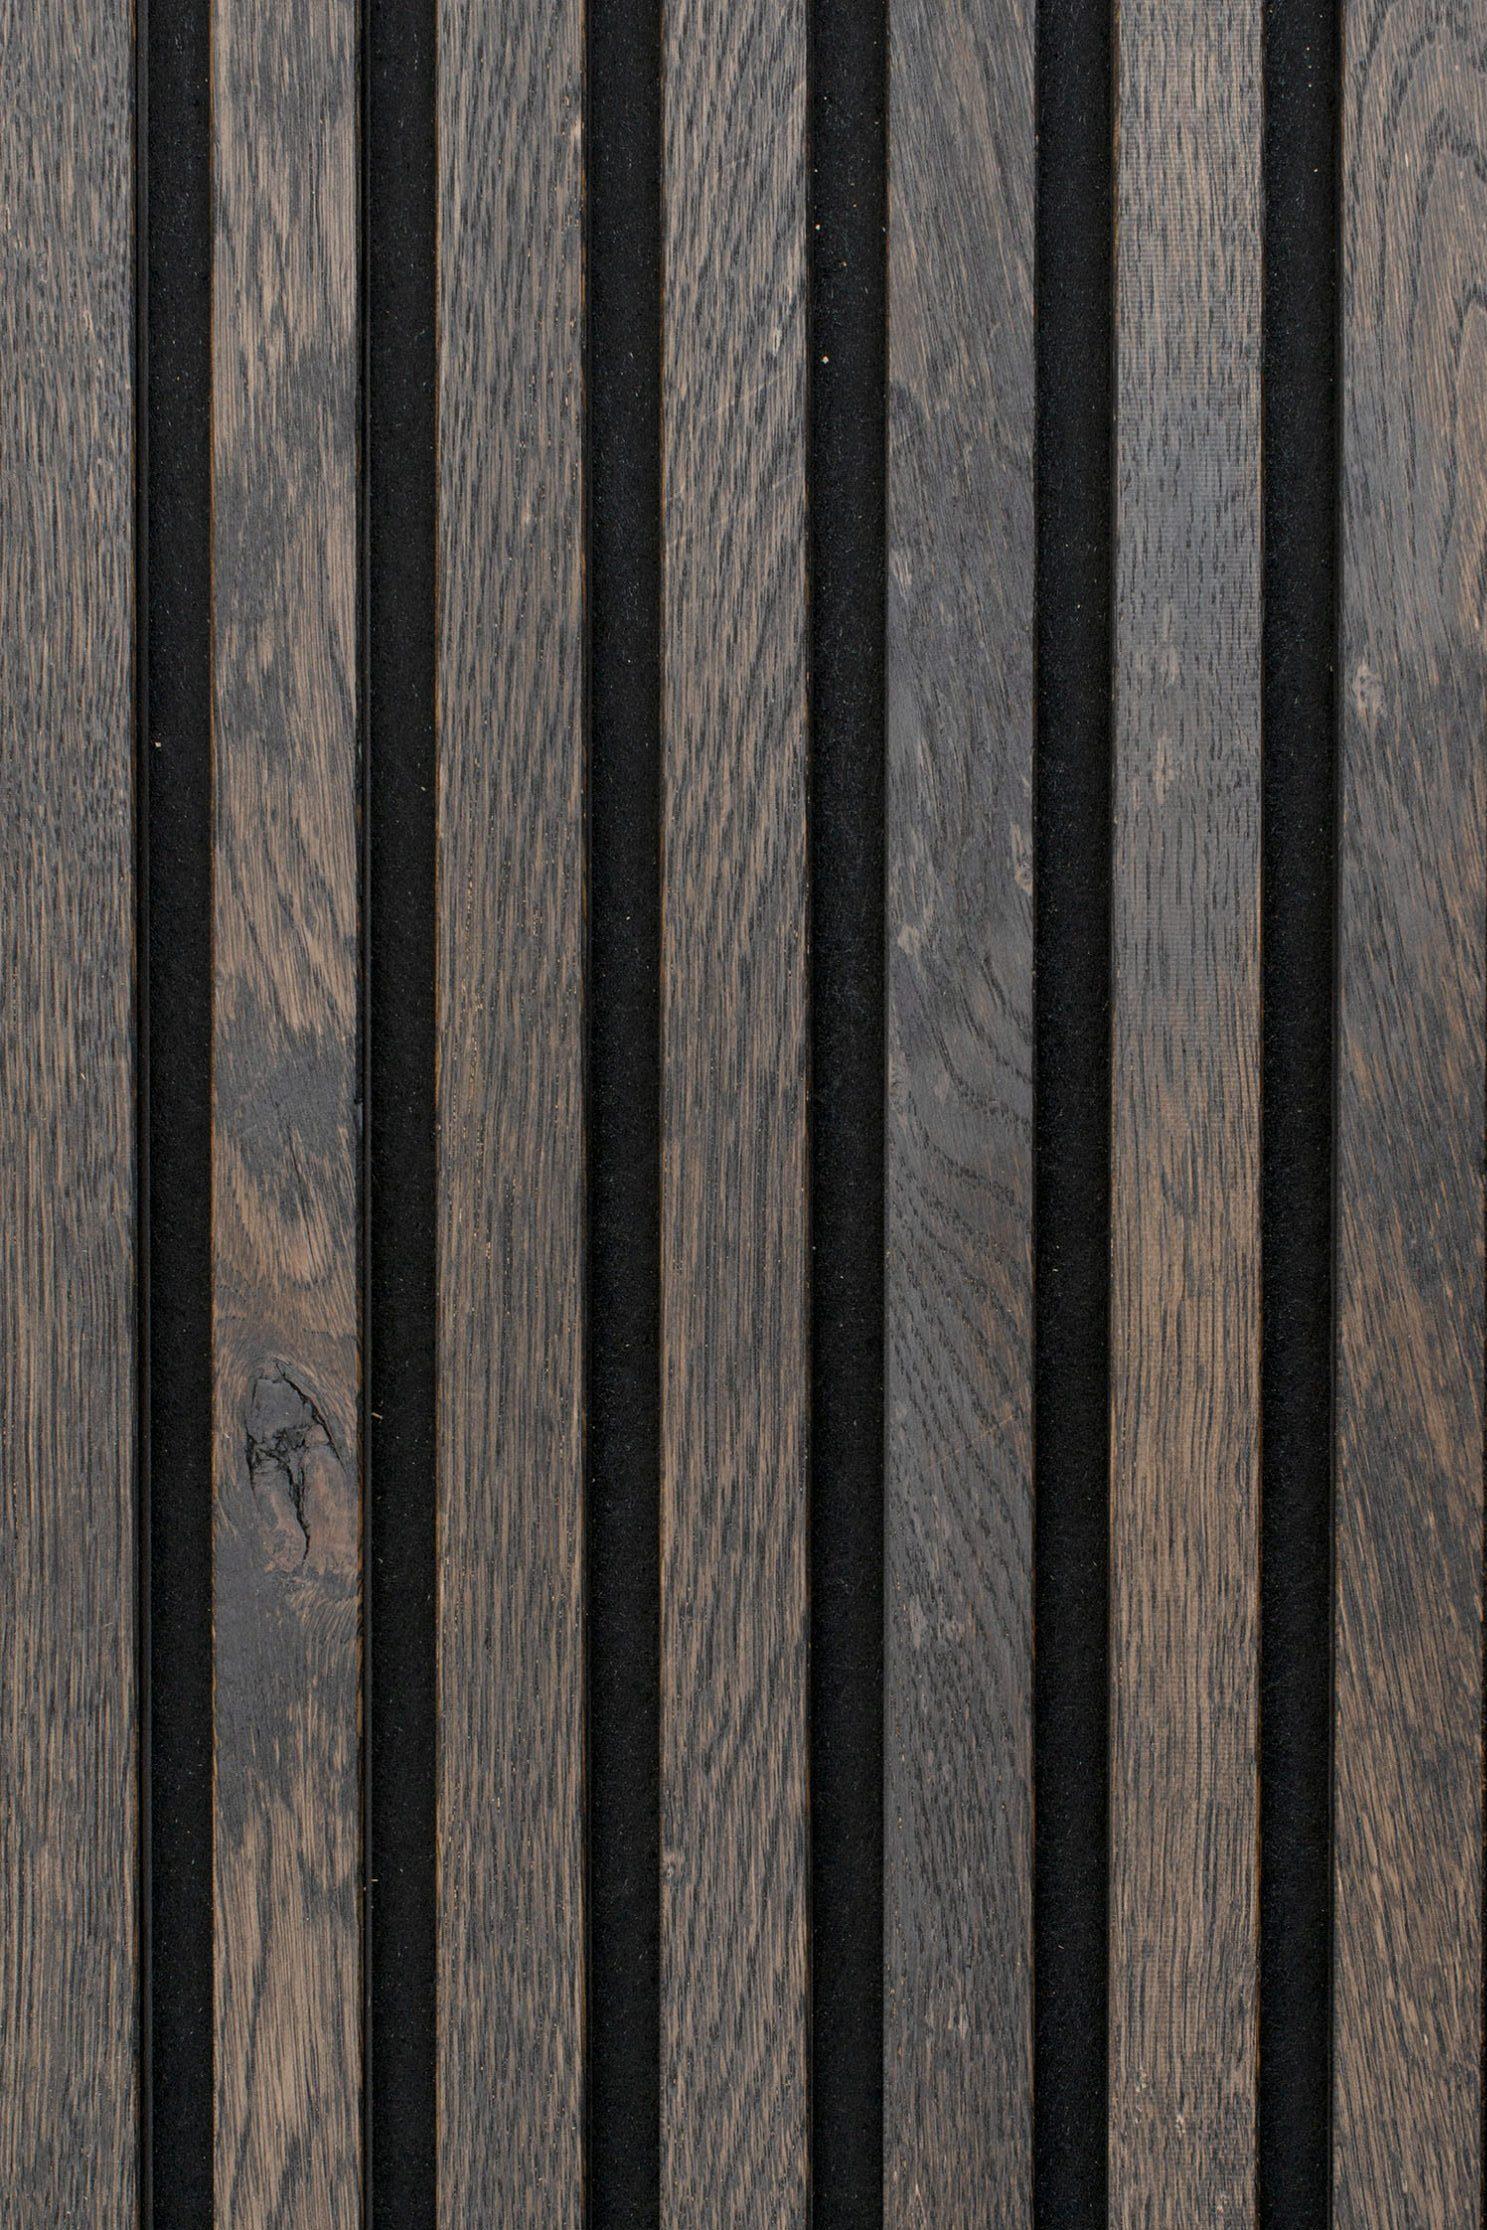 Nawood Black Forest 300x60x2,2 akustični panel sa drvenim letvicama 1.80